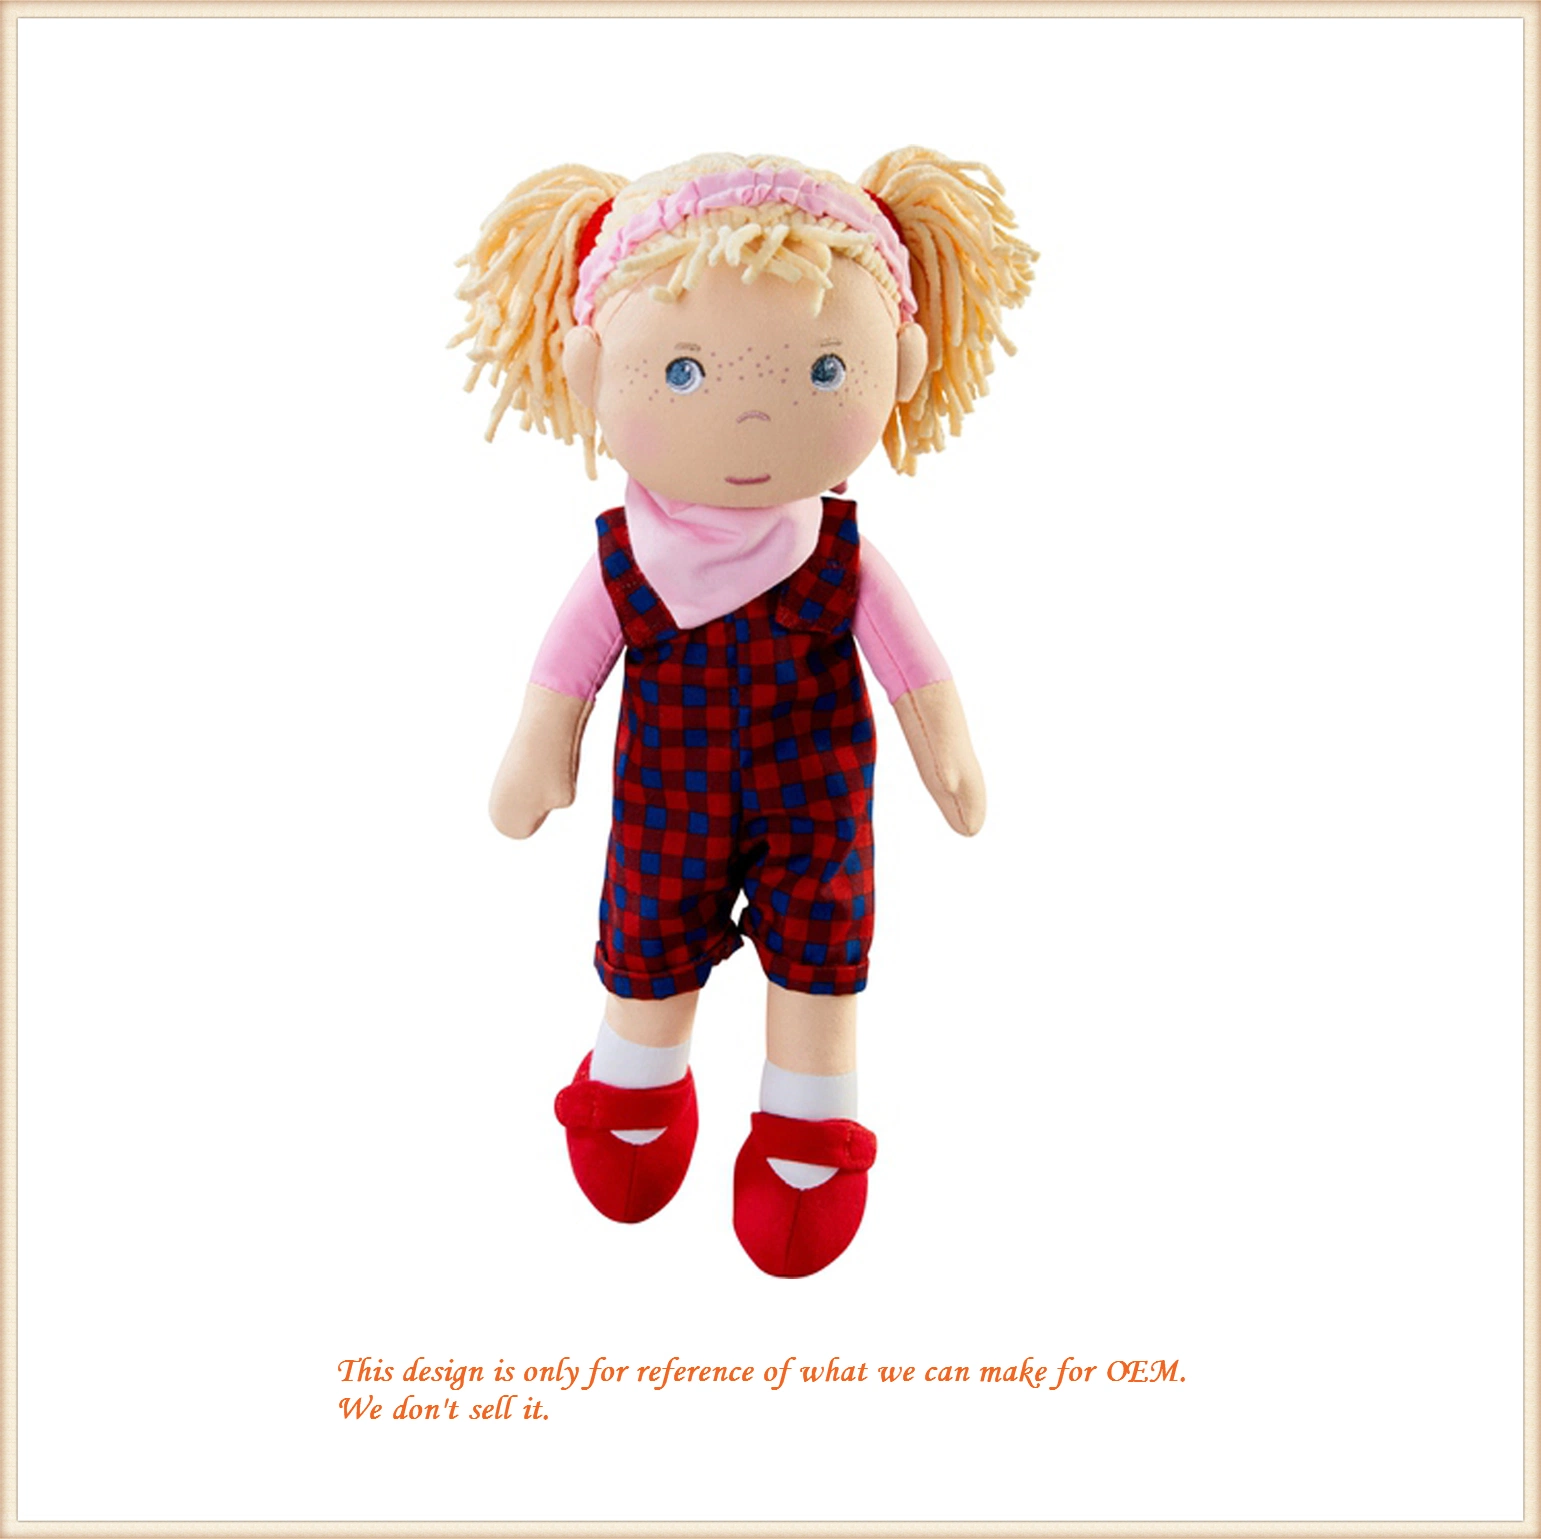 Wholesale/Supplier Dolls Children Girl Stuffed Plush Toys Baby Dolls